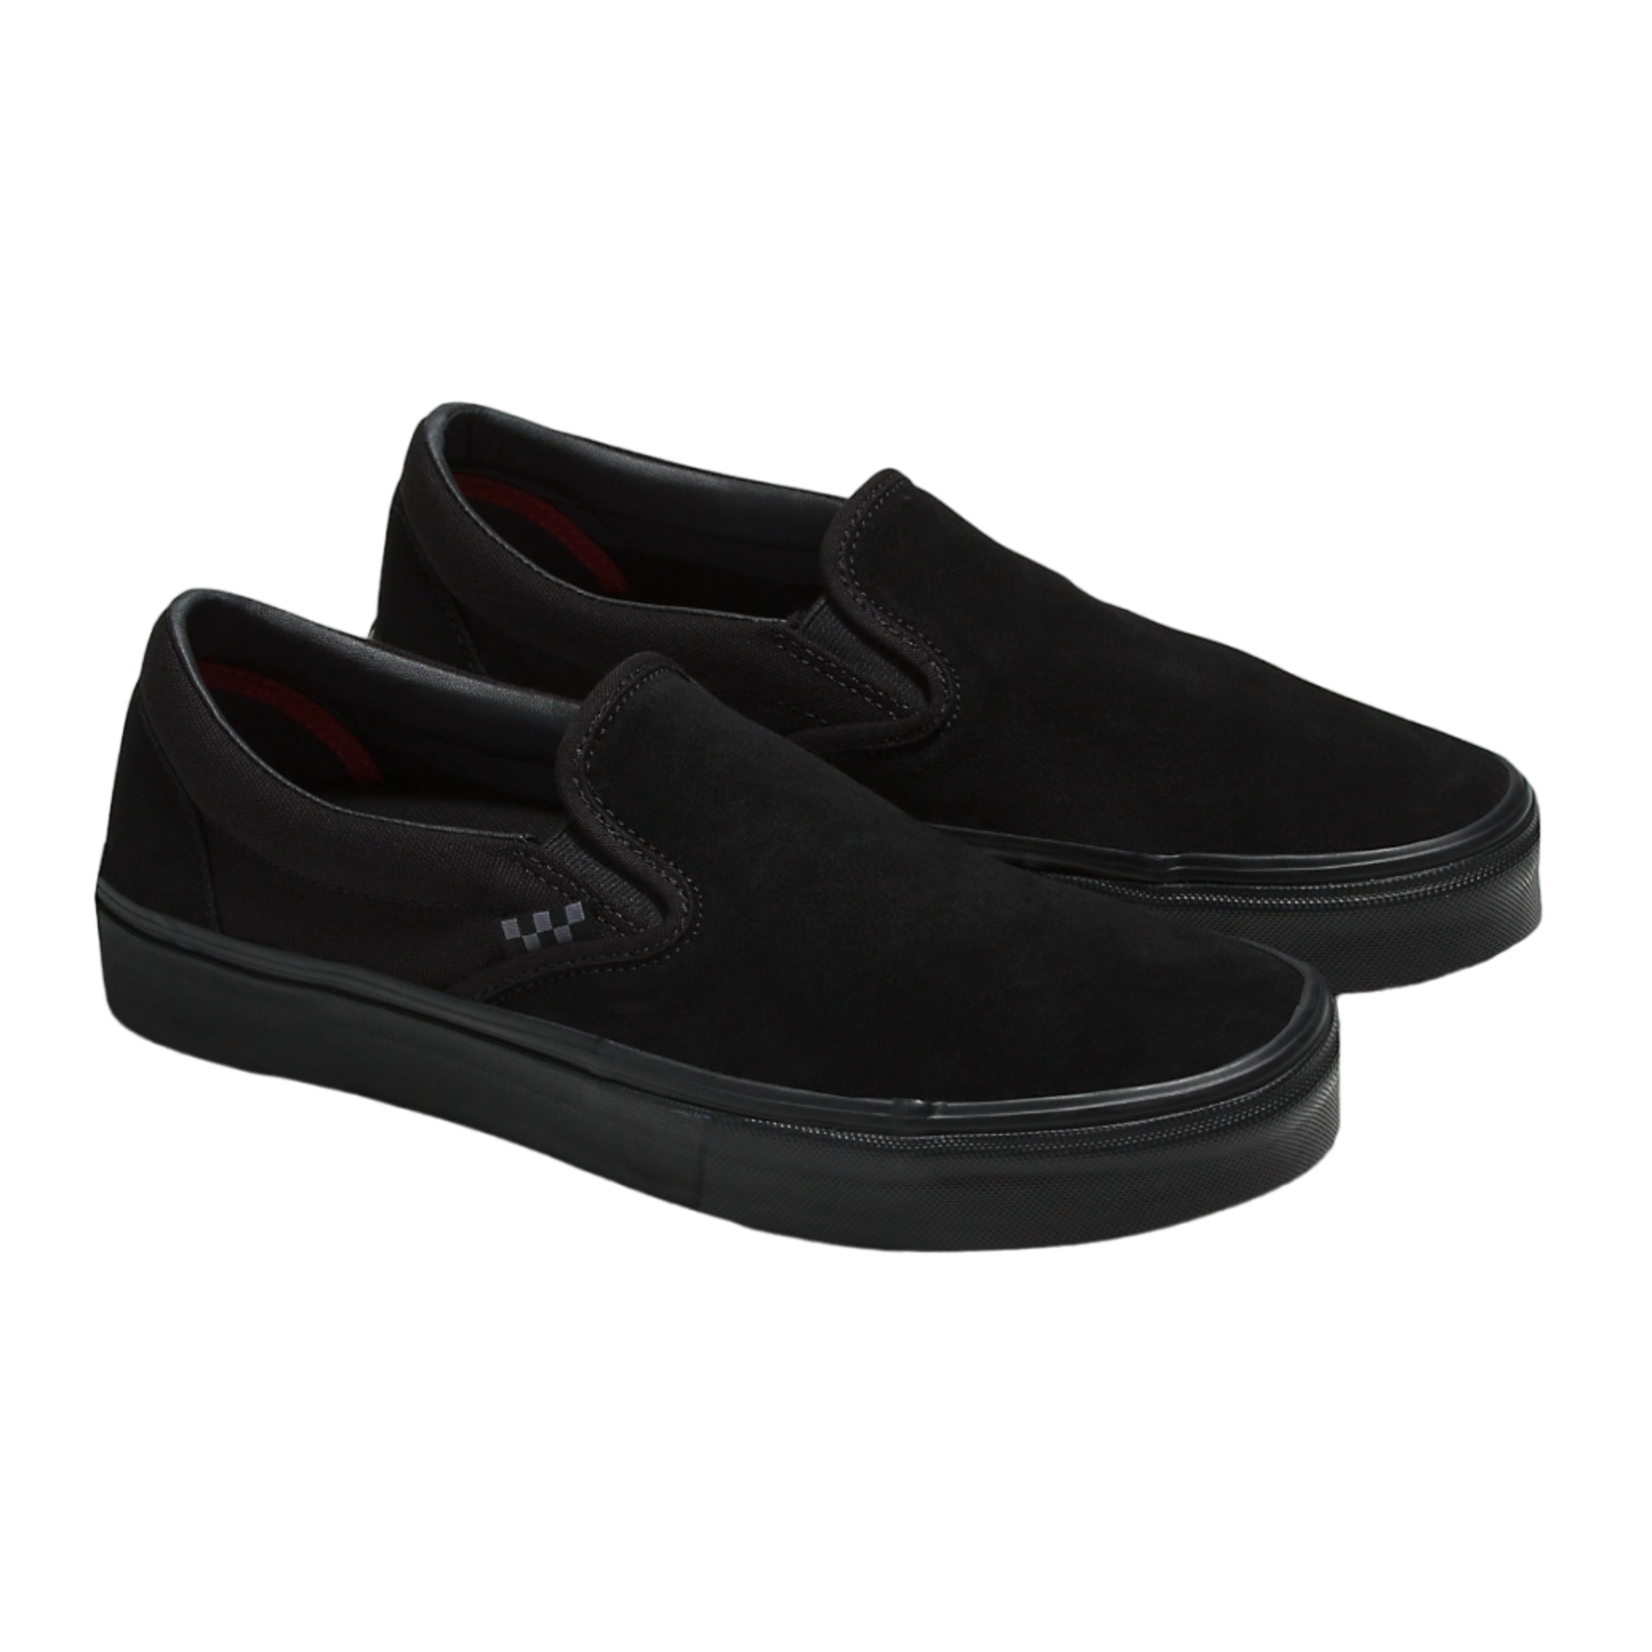 https://cdn.shoplightspeed.com/shops/613105/files/54949682/1652x1652x1/vans-vans-slip-on-pro-skate-shoes-black-black.jpg